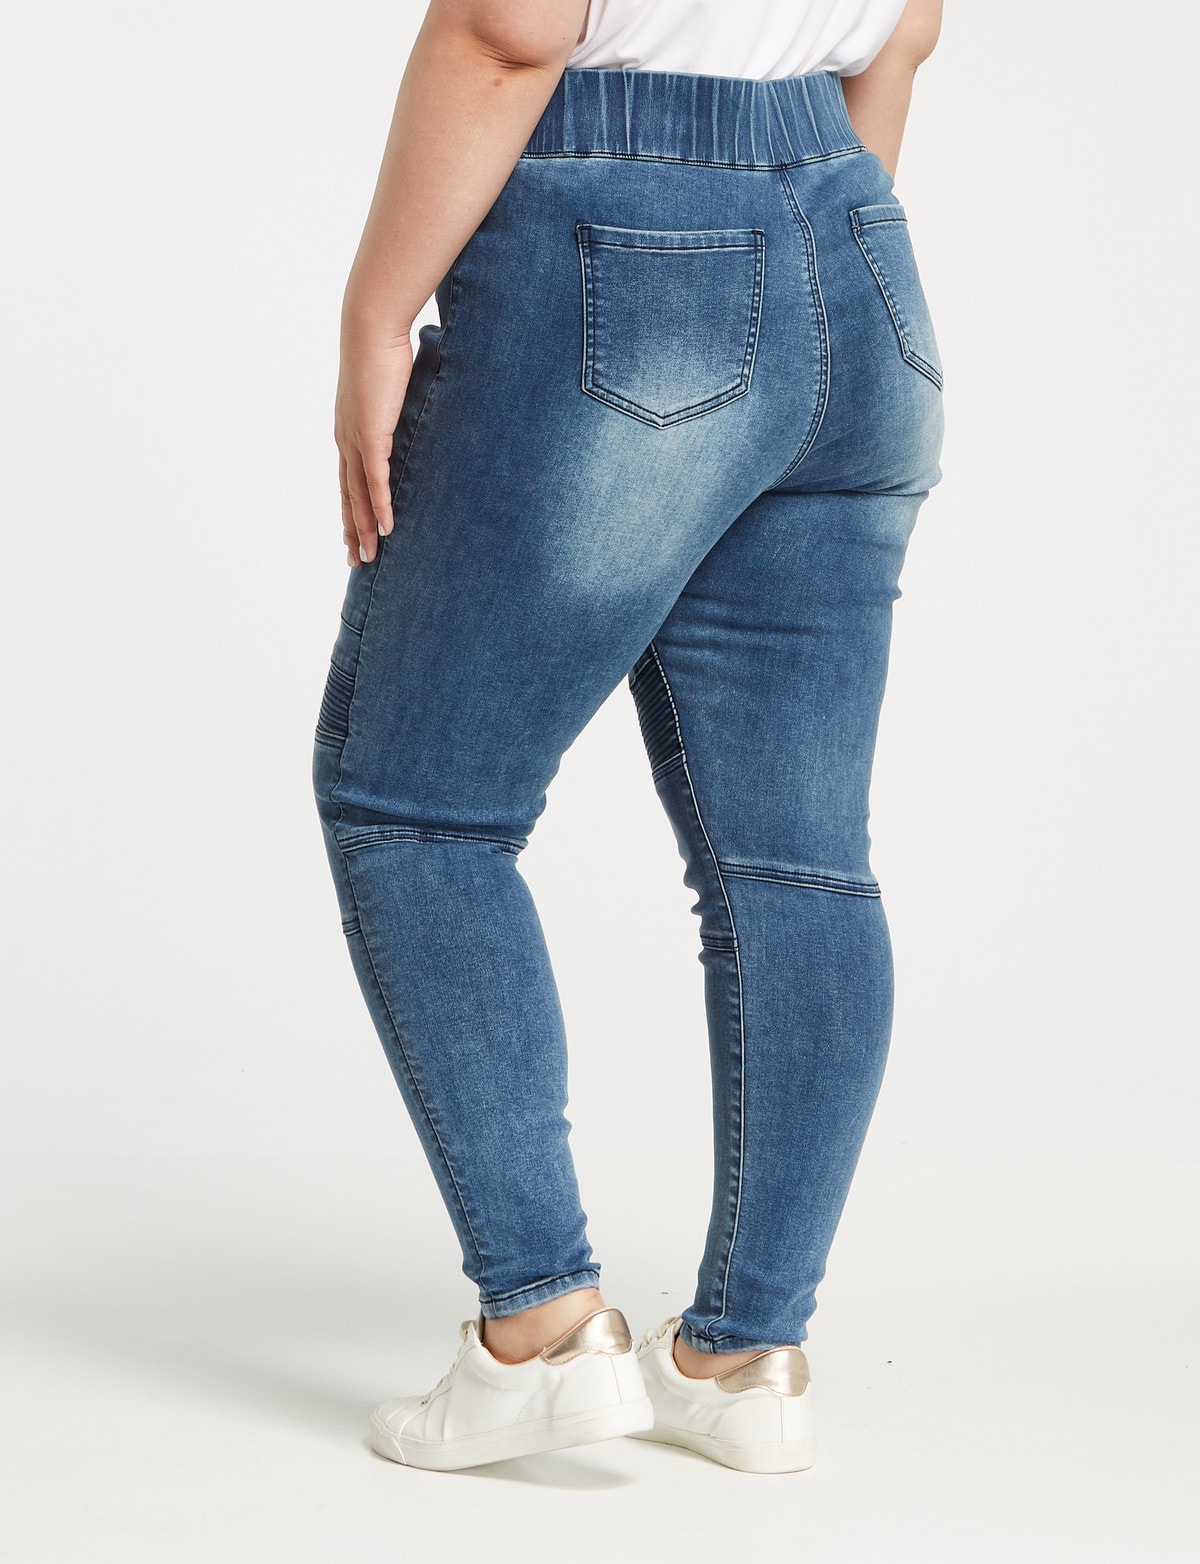 Denim Republic - Blue Jeans on Designer Wardrobe